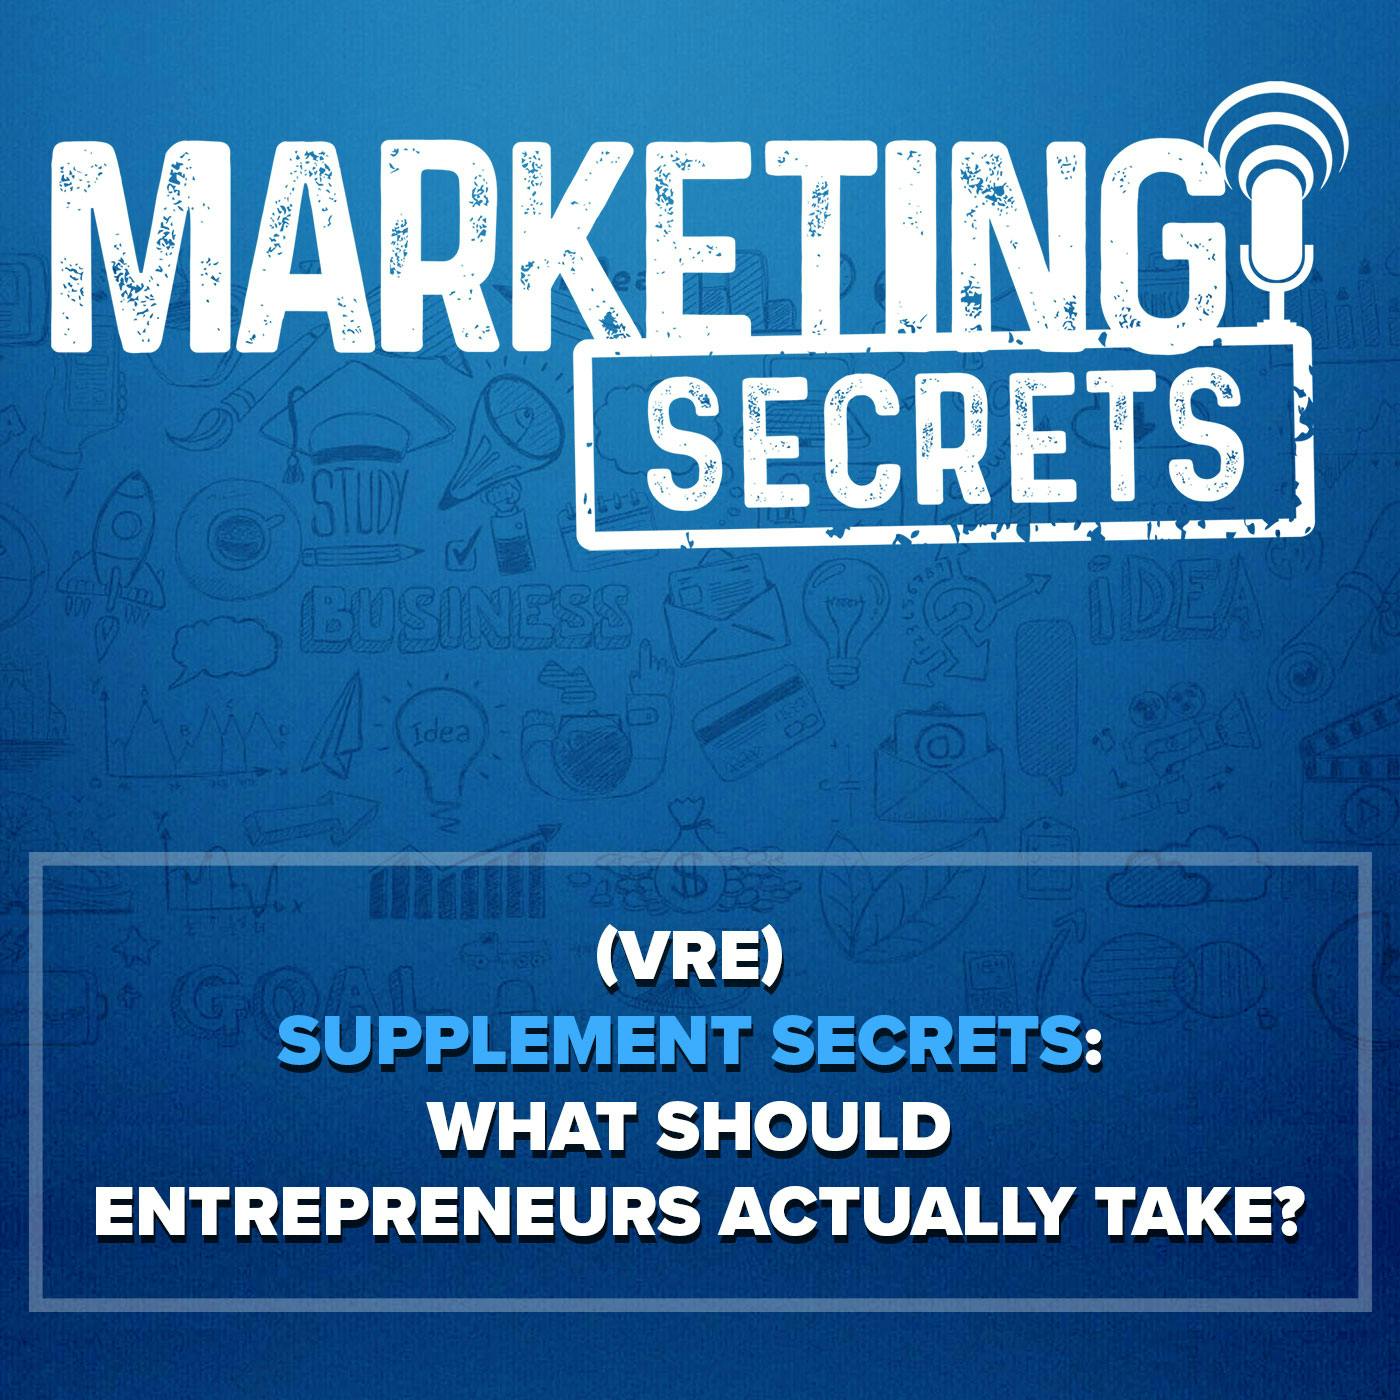 (VRE) Supplement Secrets: What Should Entrepreneurs Actually Take?